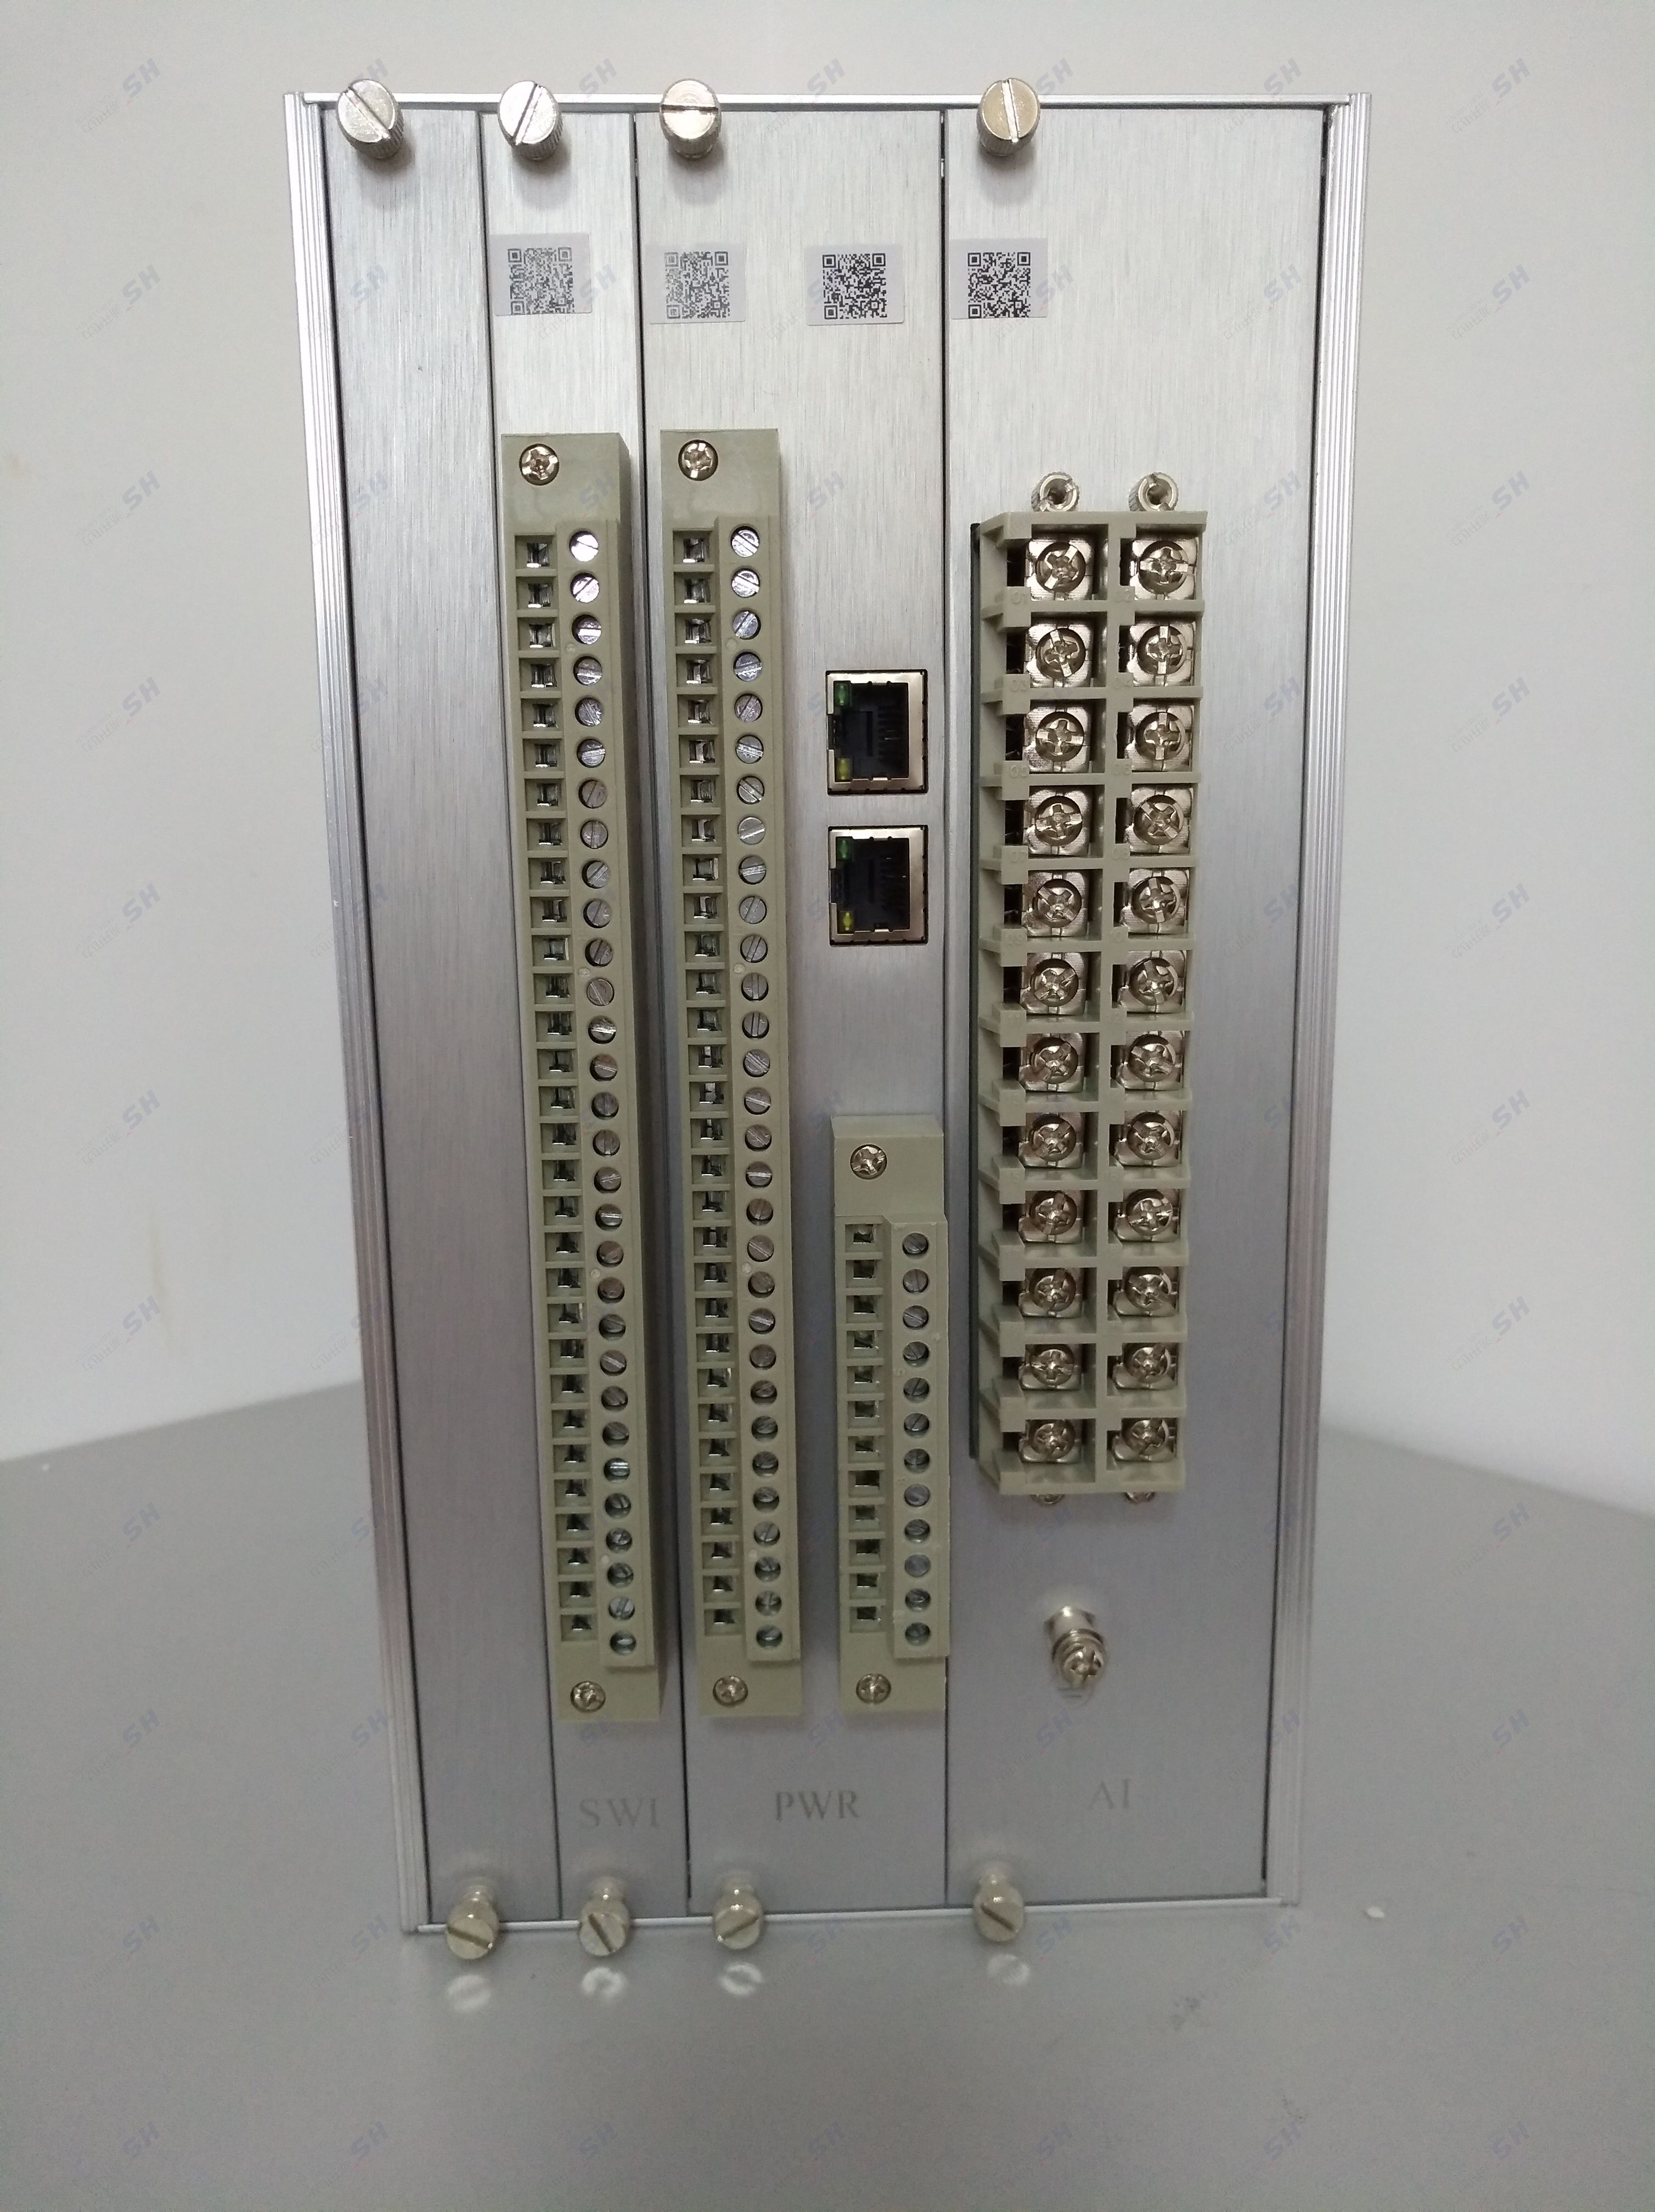 PCS-9651C备用电源自投装置